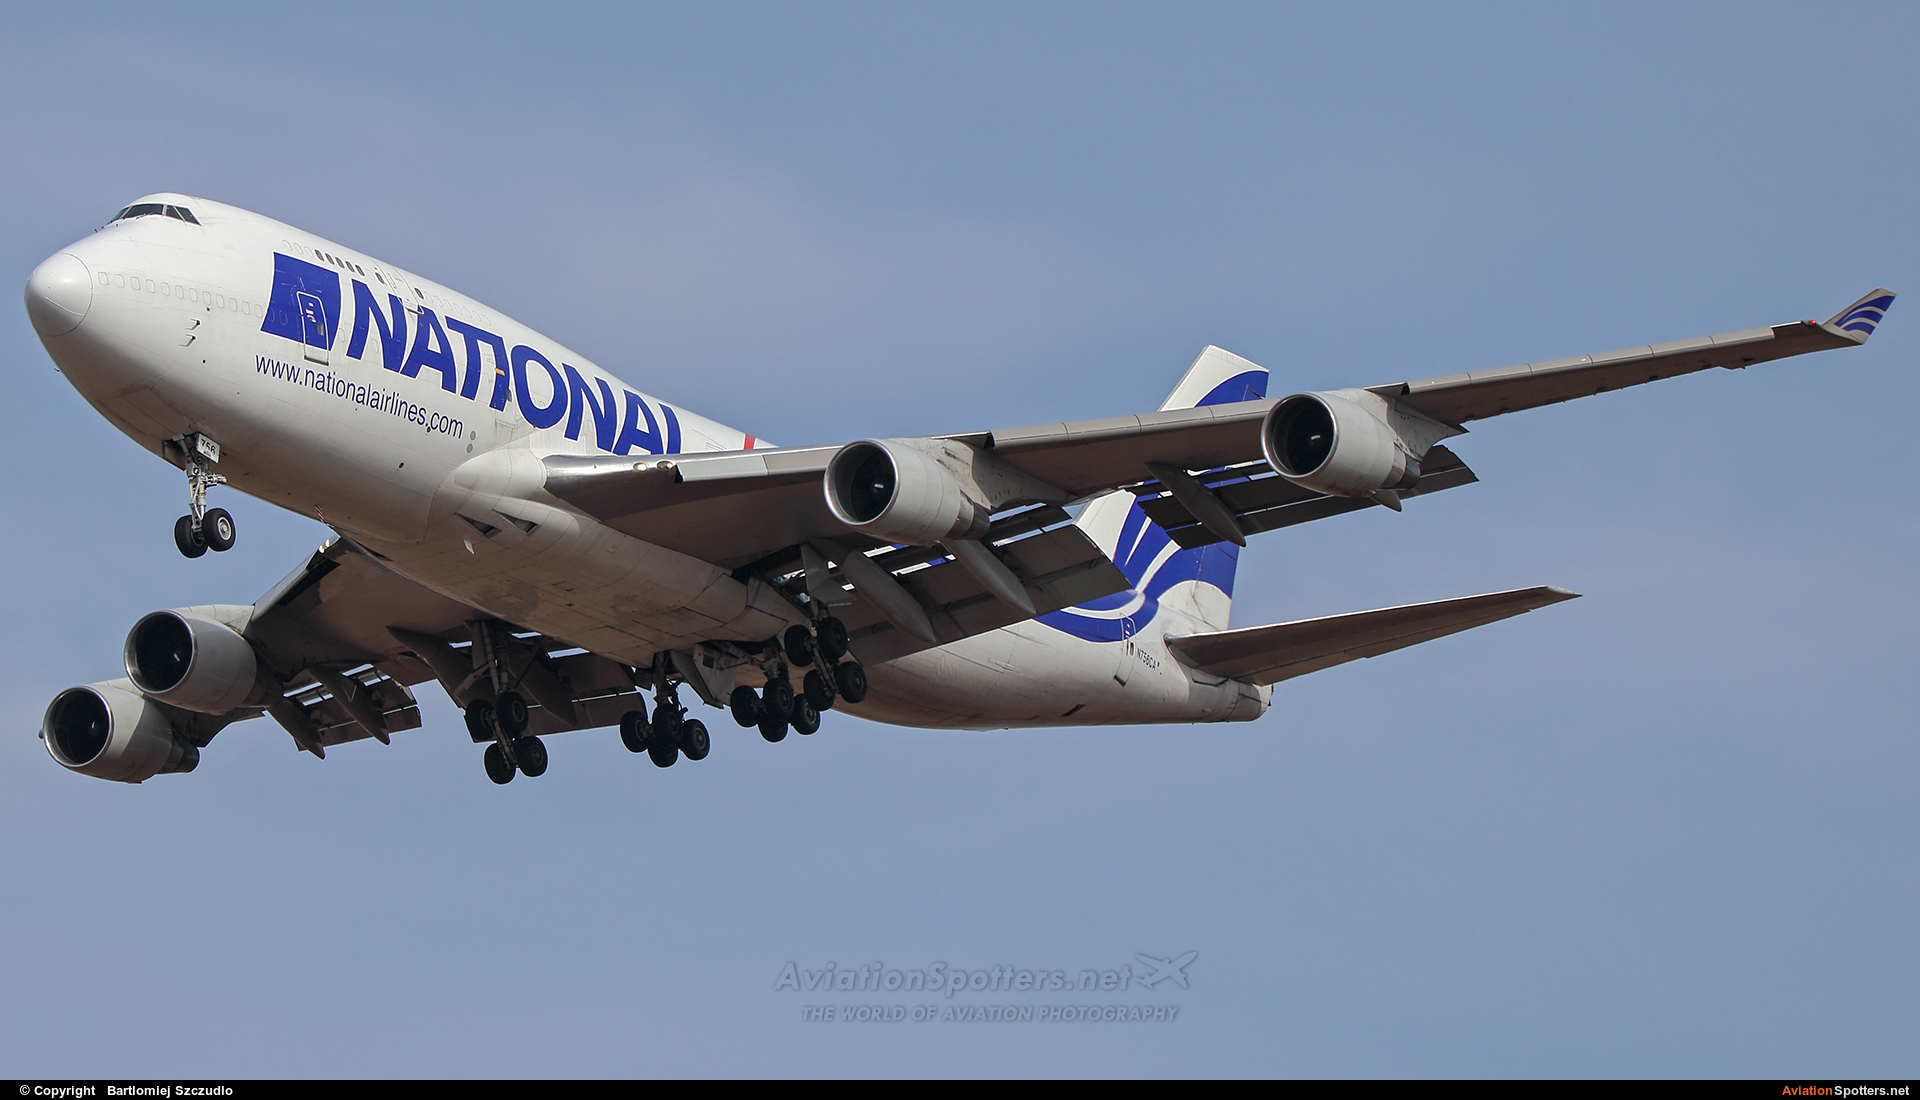 National Airlines  -  747-400BCF  (N756CA) By Bartlomiej Szczudlo  (BartekSzczudlo)